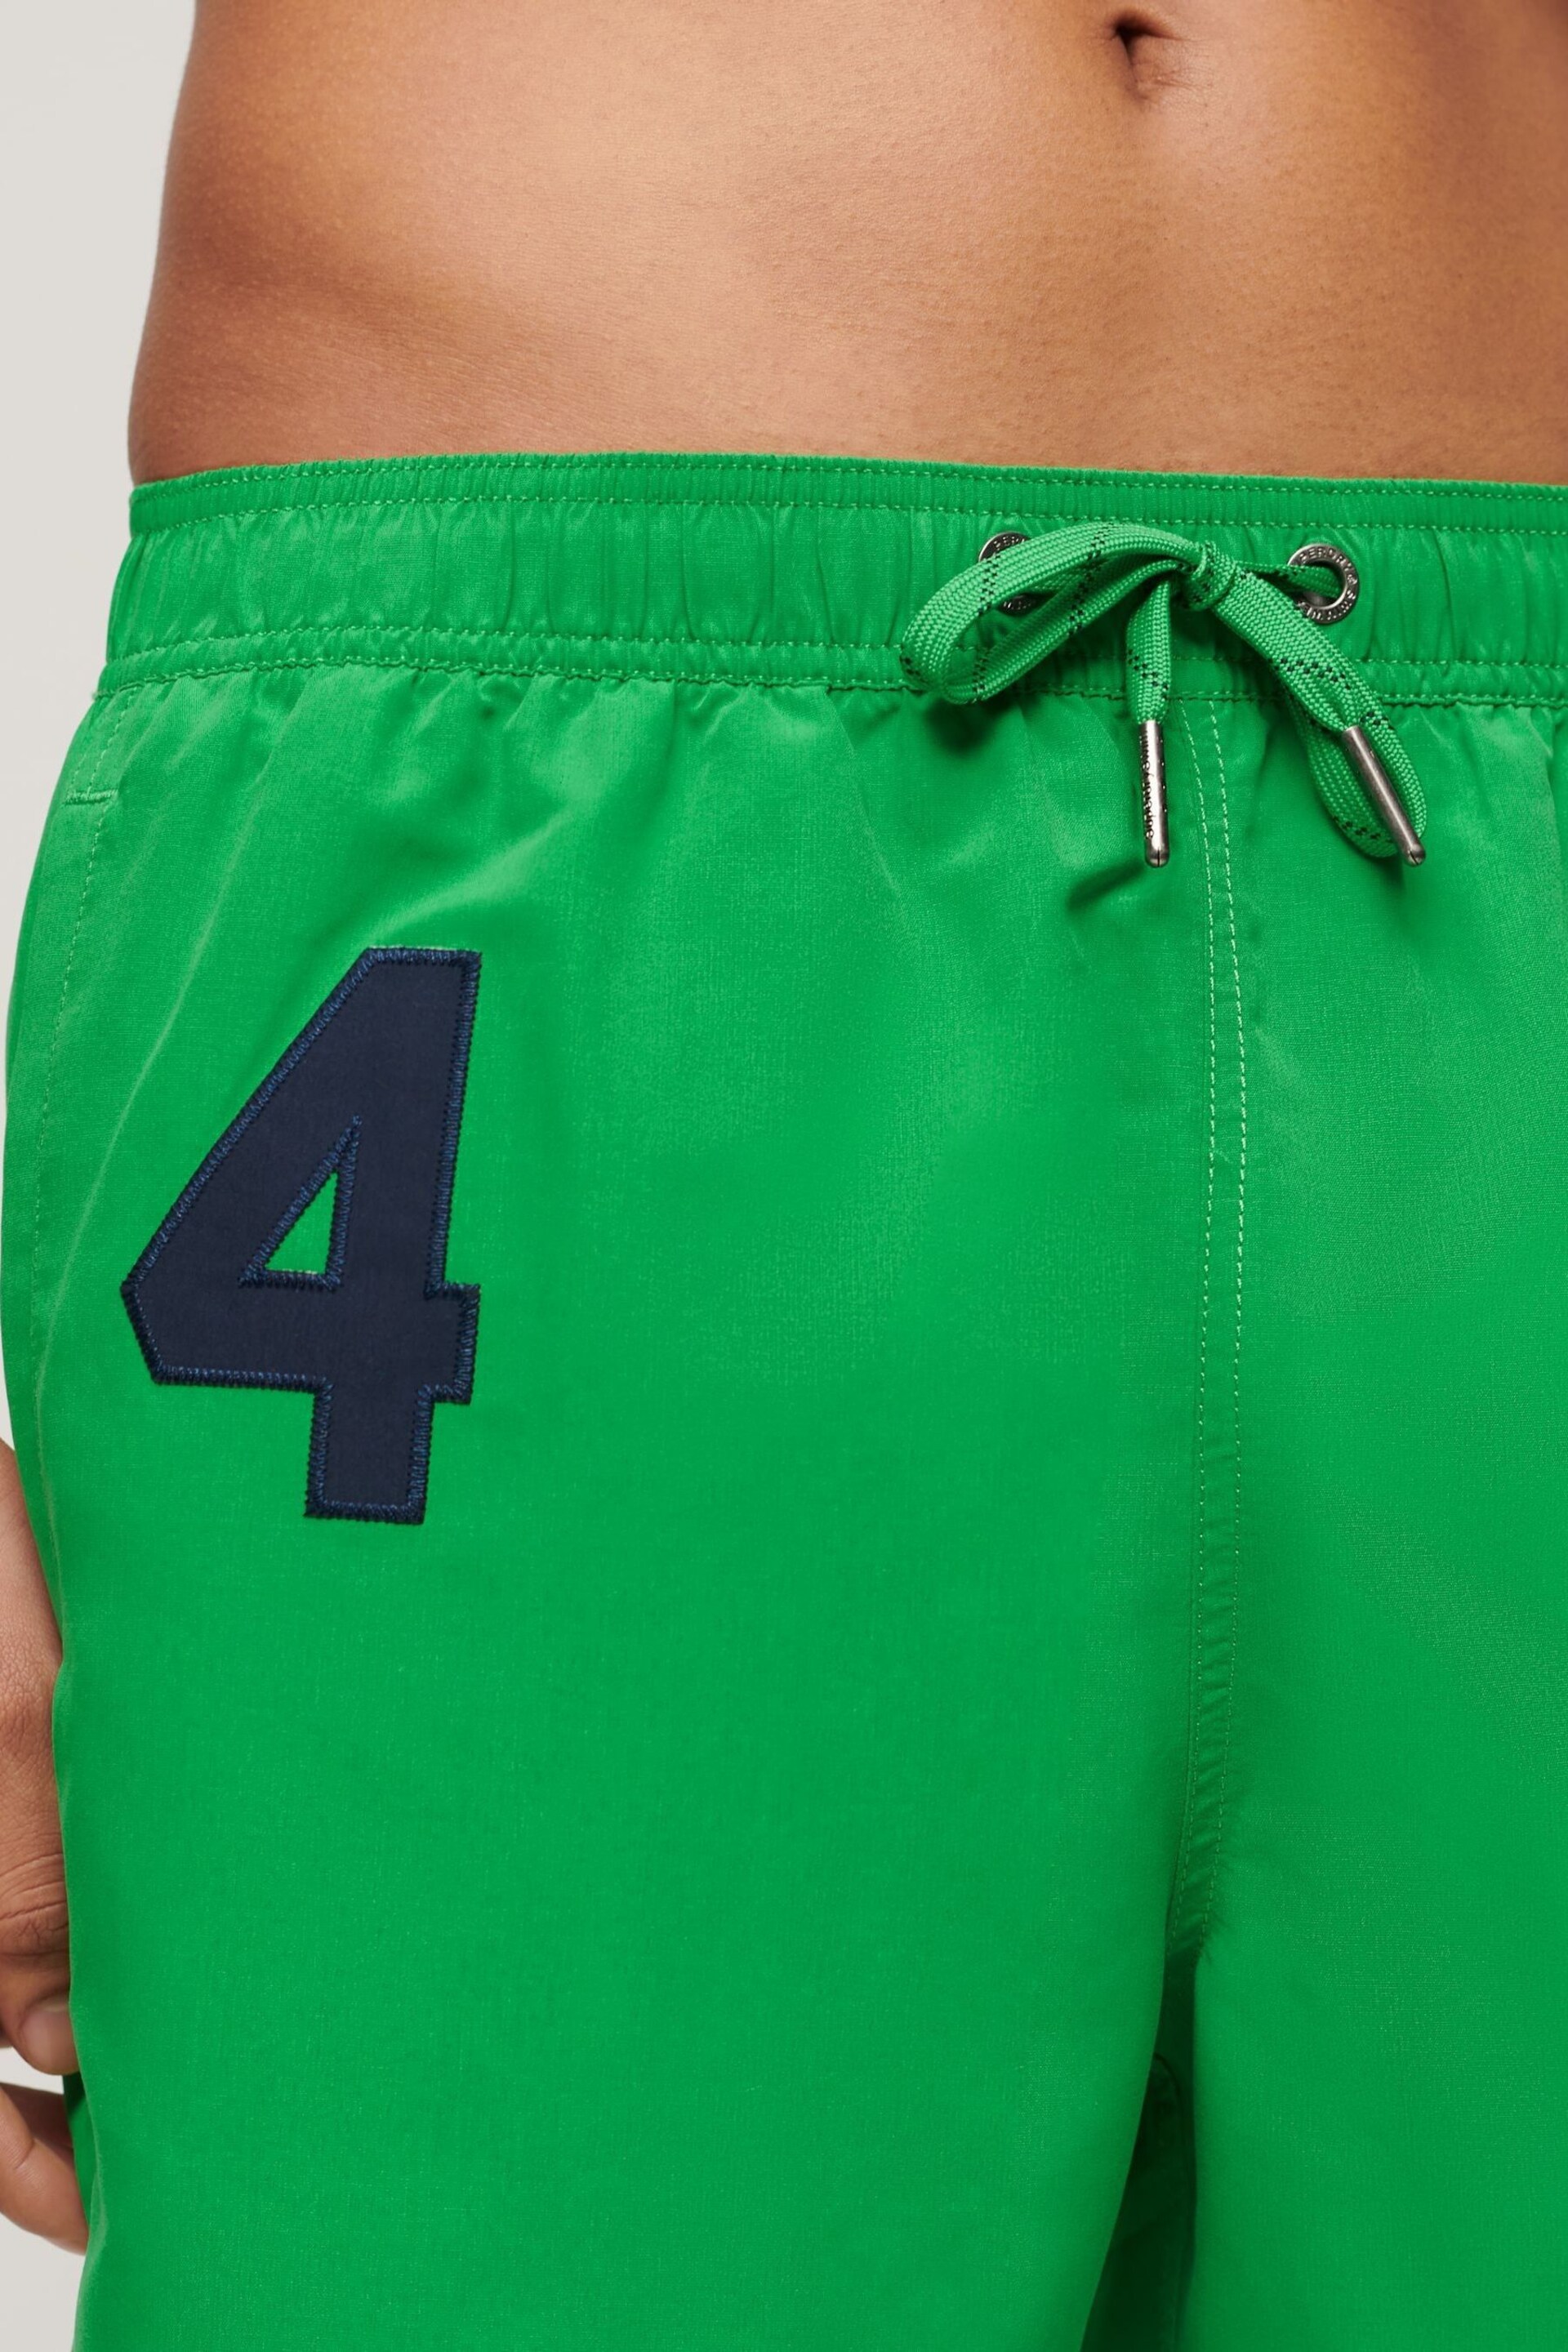 Superdry Green Vintage Polo Shirt 17" Swim Shorts - Image 3 of 7